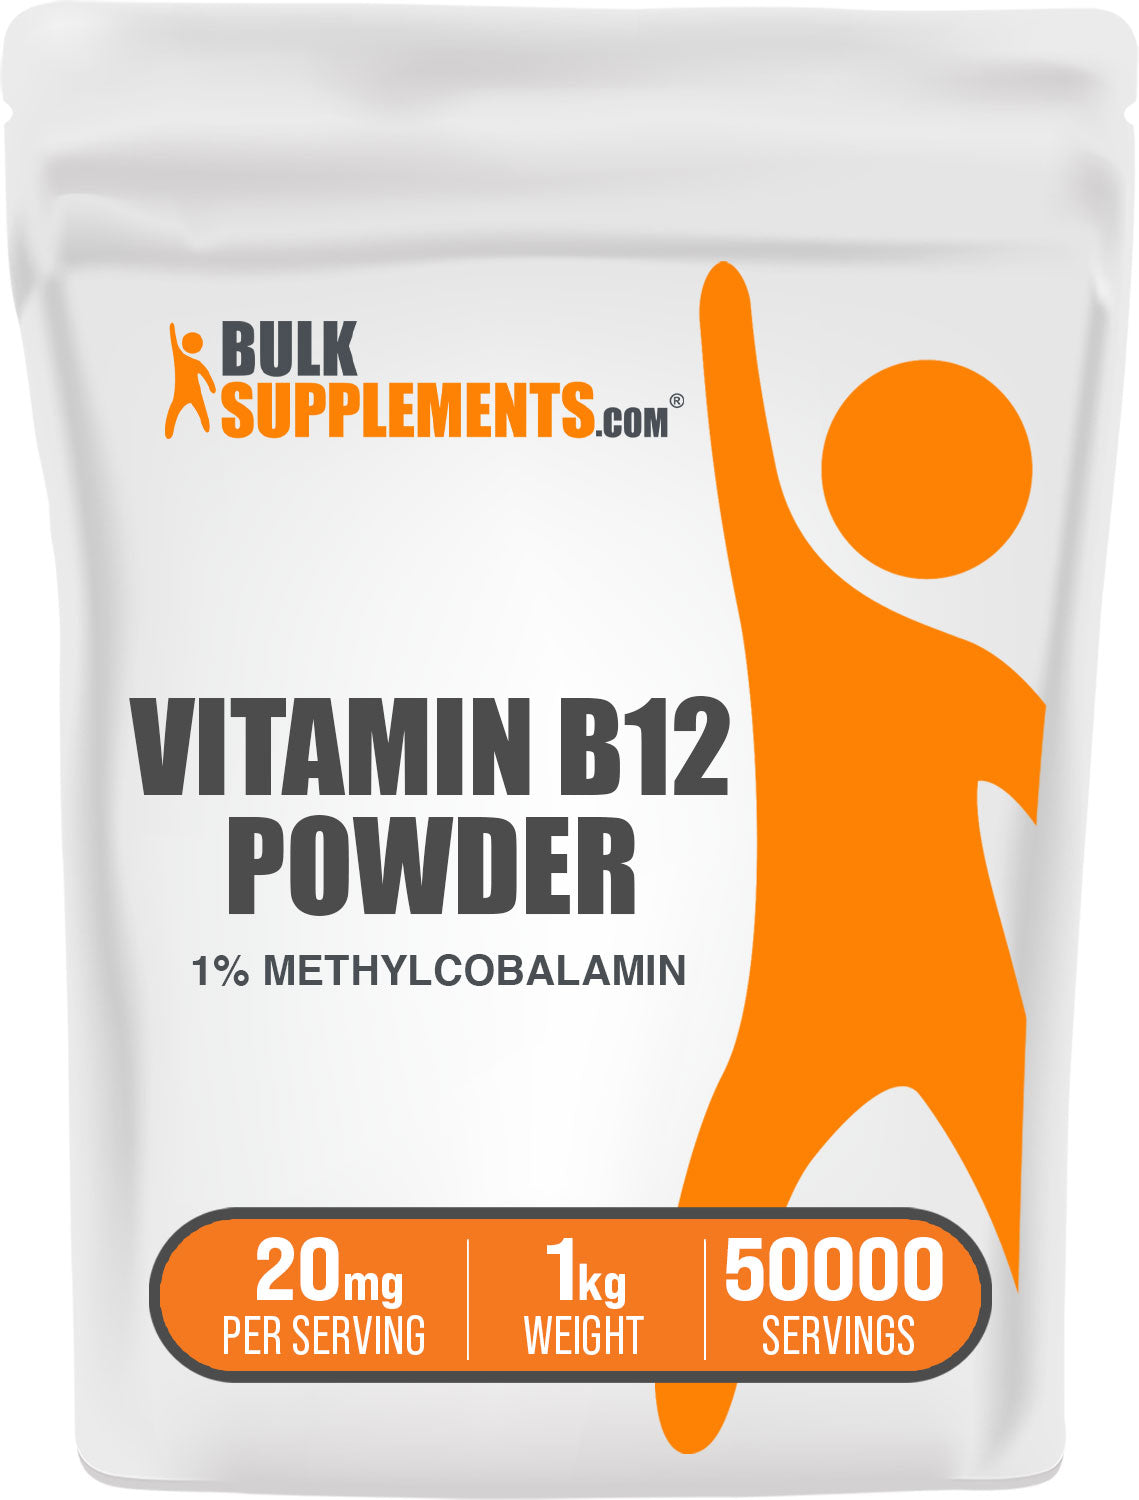 BulkSupplements Vitamin B12 Powder 1% Methylcobalamin 1kg bag